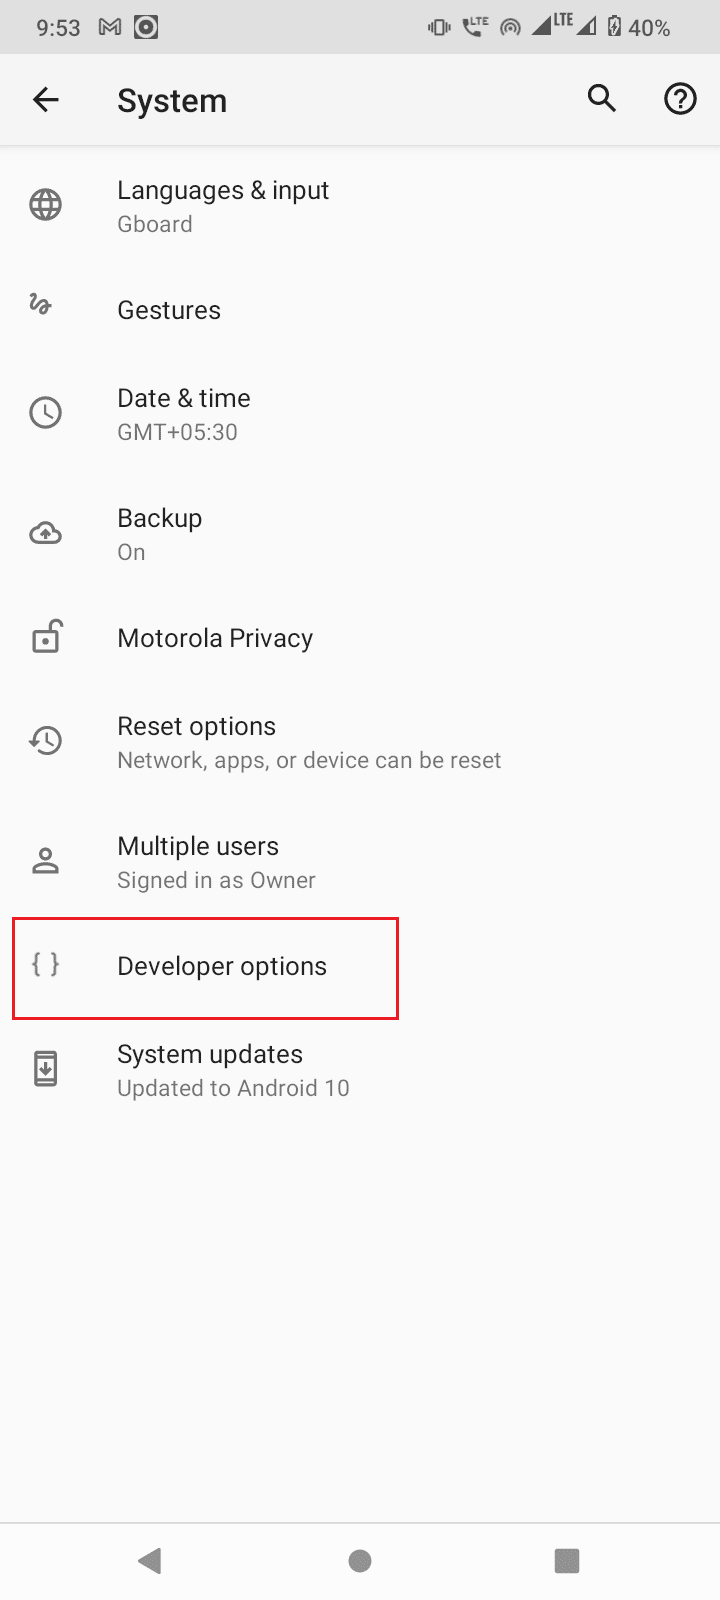 now tap on developer options